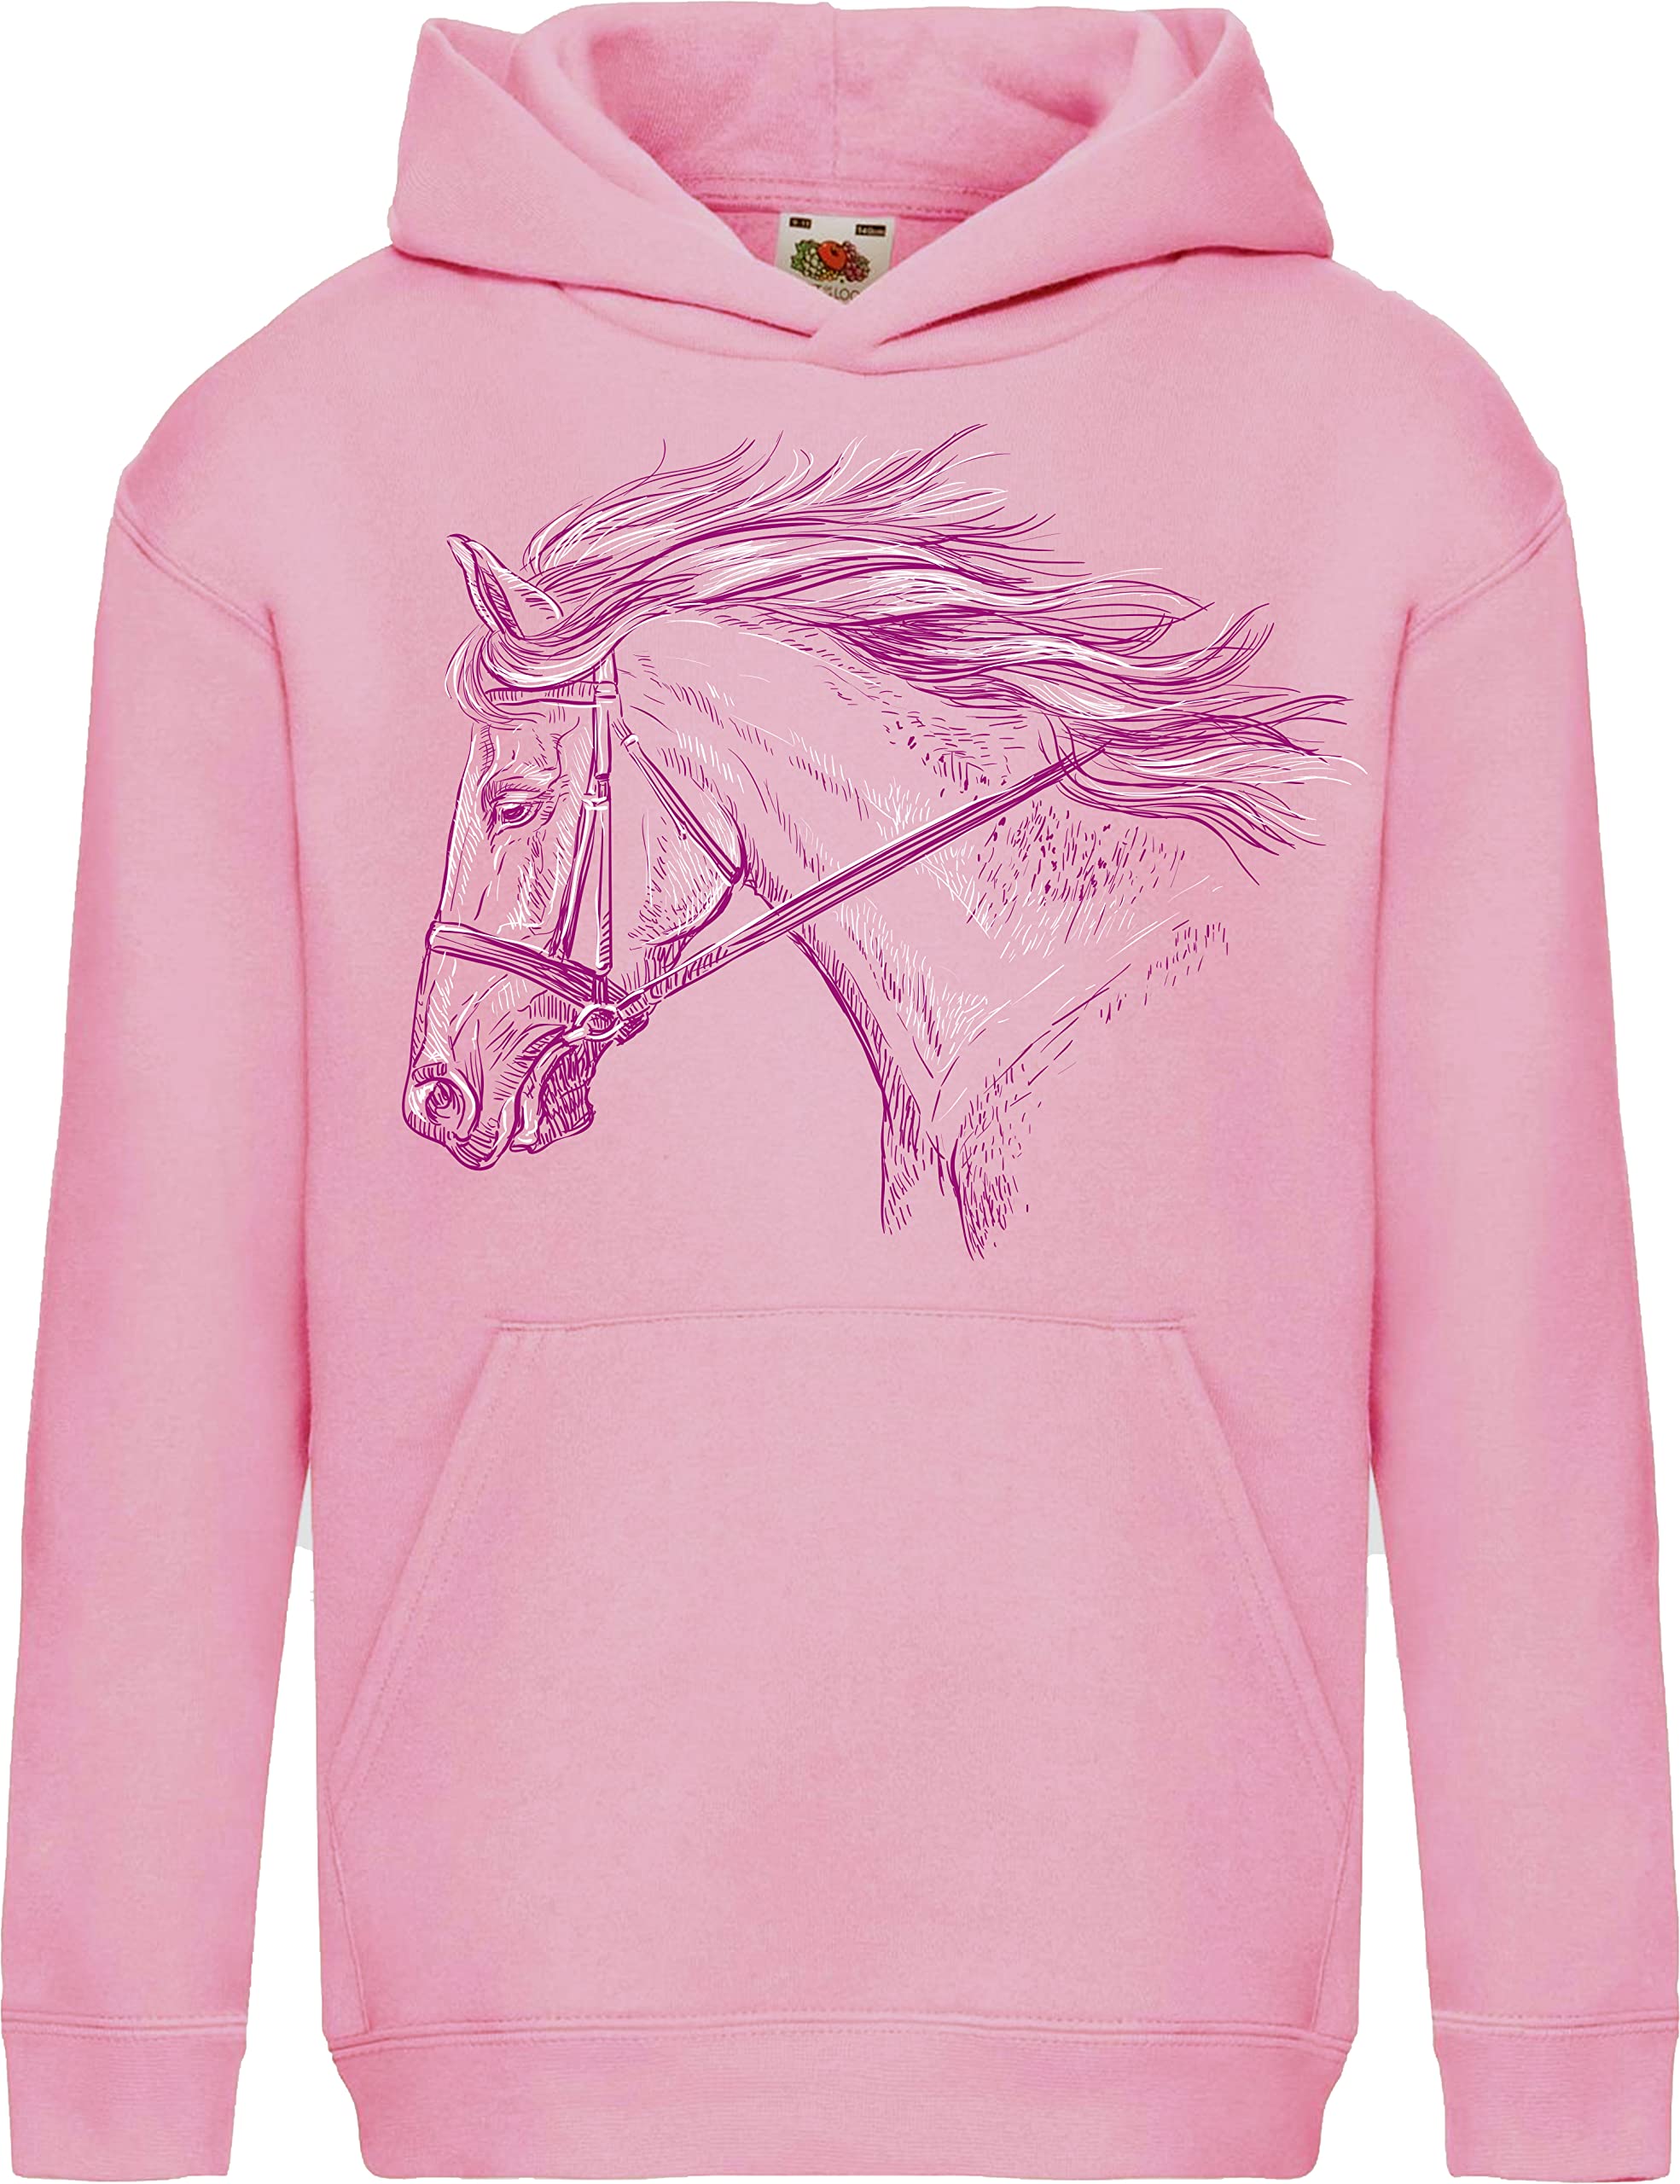 Baddery Pferde Pullover Mädchen - My Horse - Pferde Geschenk - Kinder Hoodie Pferd - Reitsport Bekleidung (152)